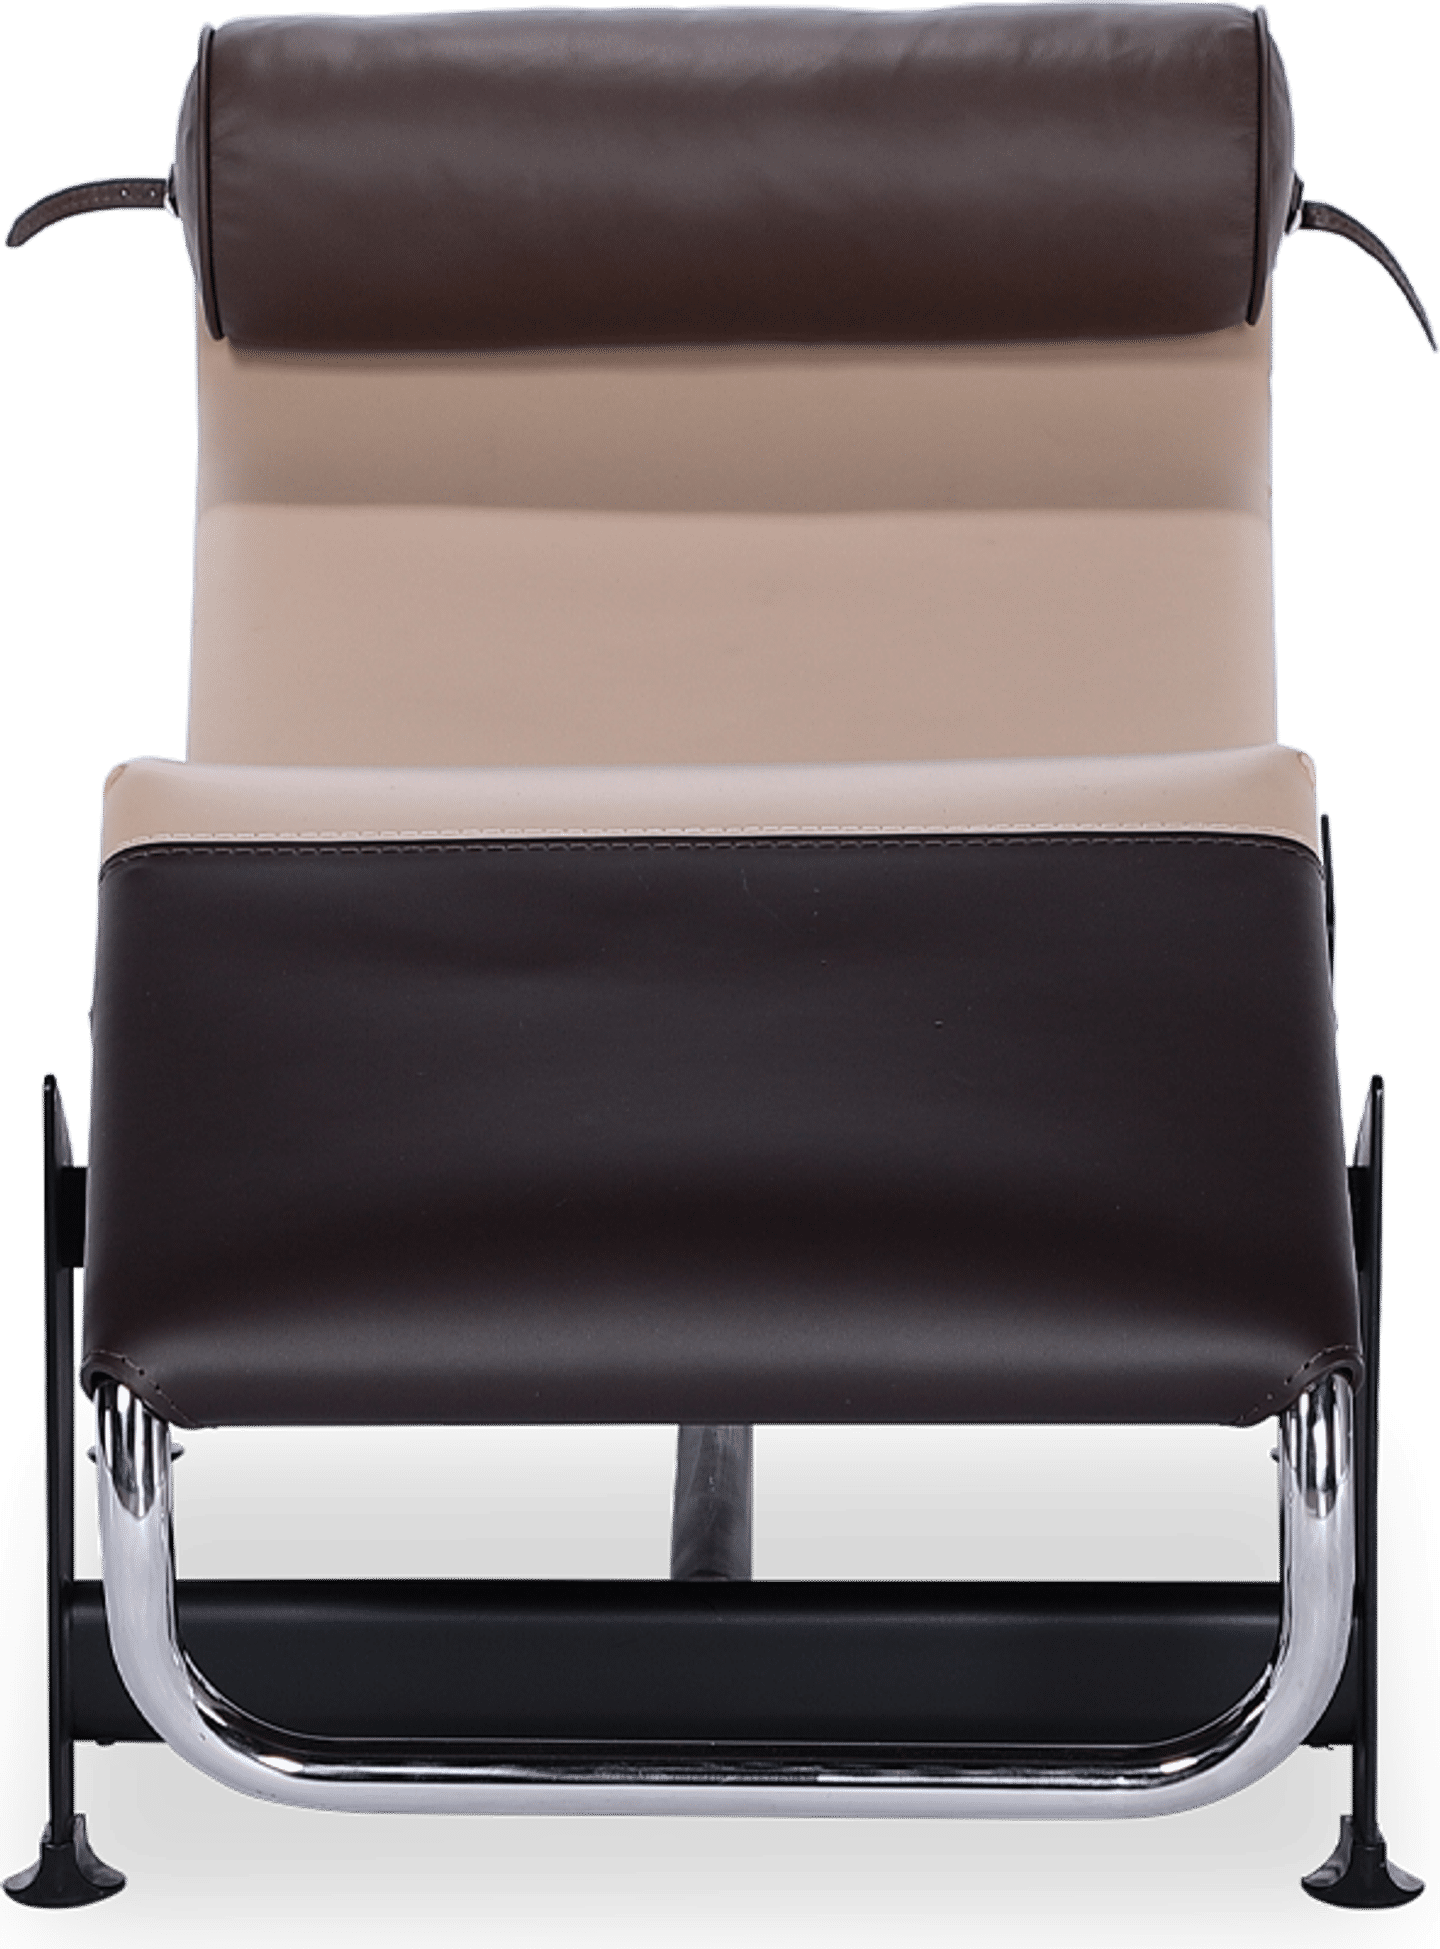 Chaise longue stile LC4 - Edizione speciale Faux Leather/Beige image.